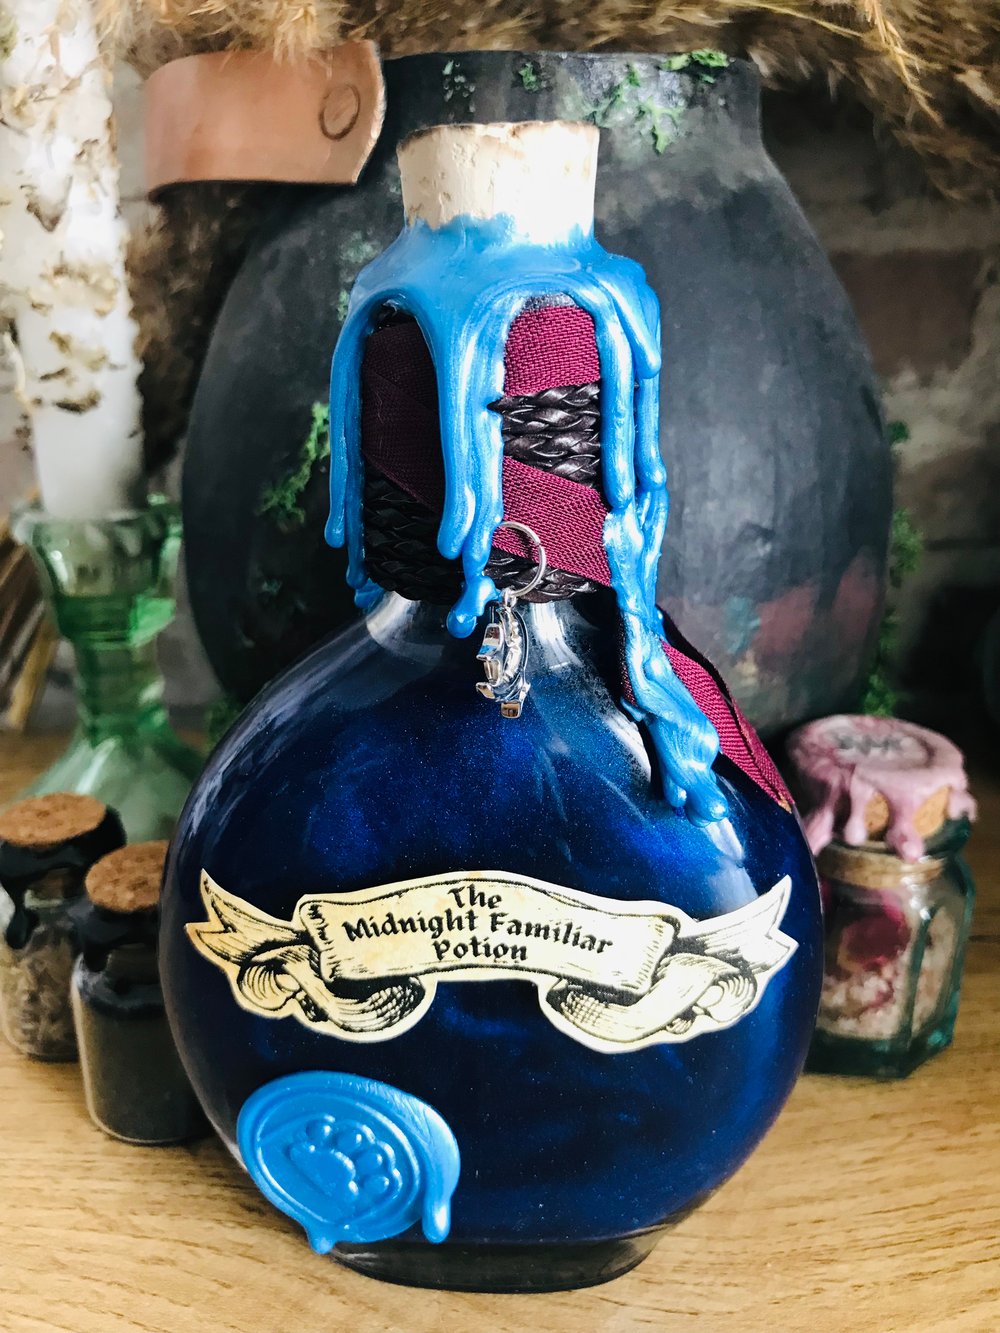 The midnight familiar potion